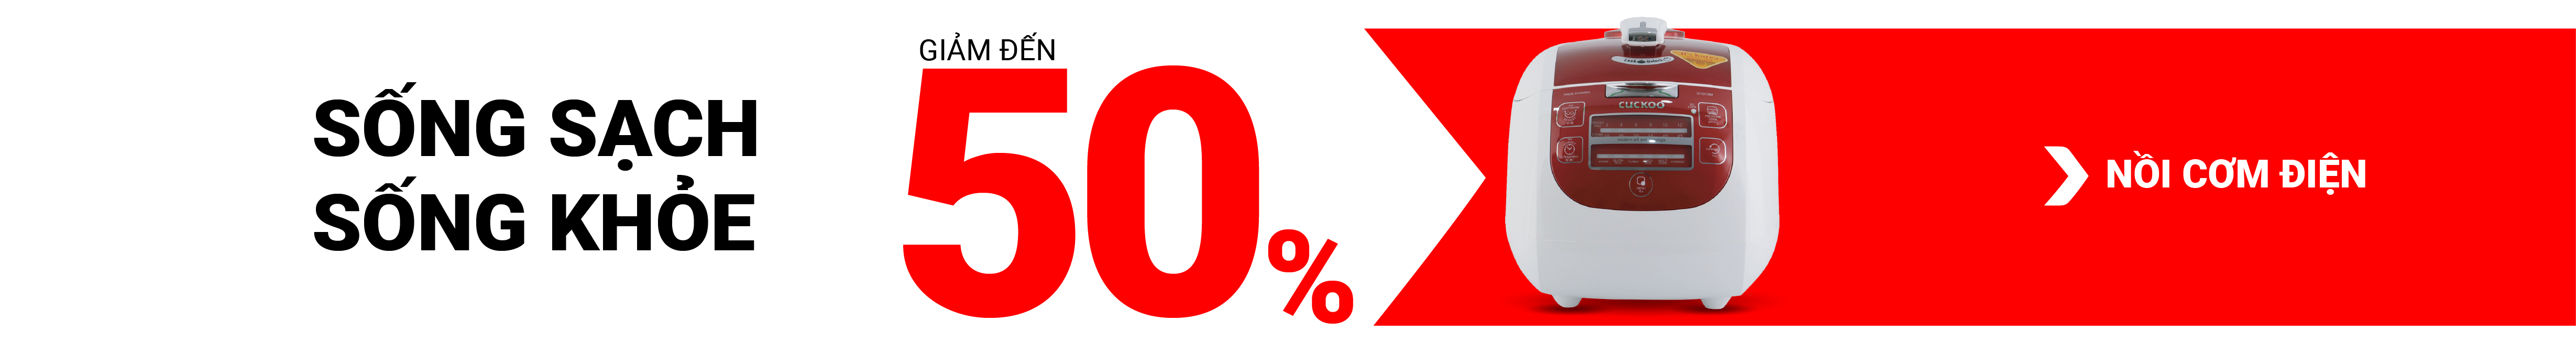 N%E1%BB%93i%20c%C6%A1m%20%C4%91i%E1%BB%87n